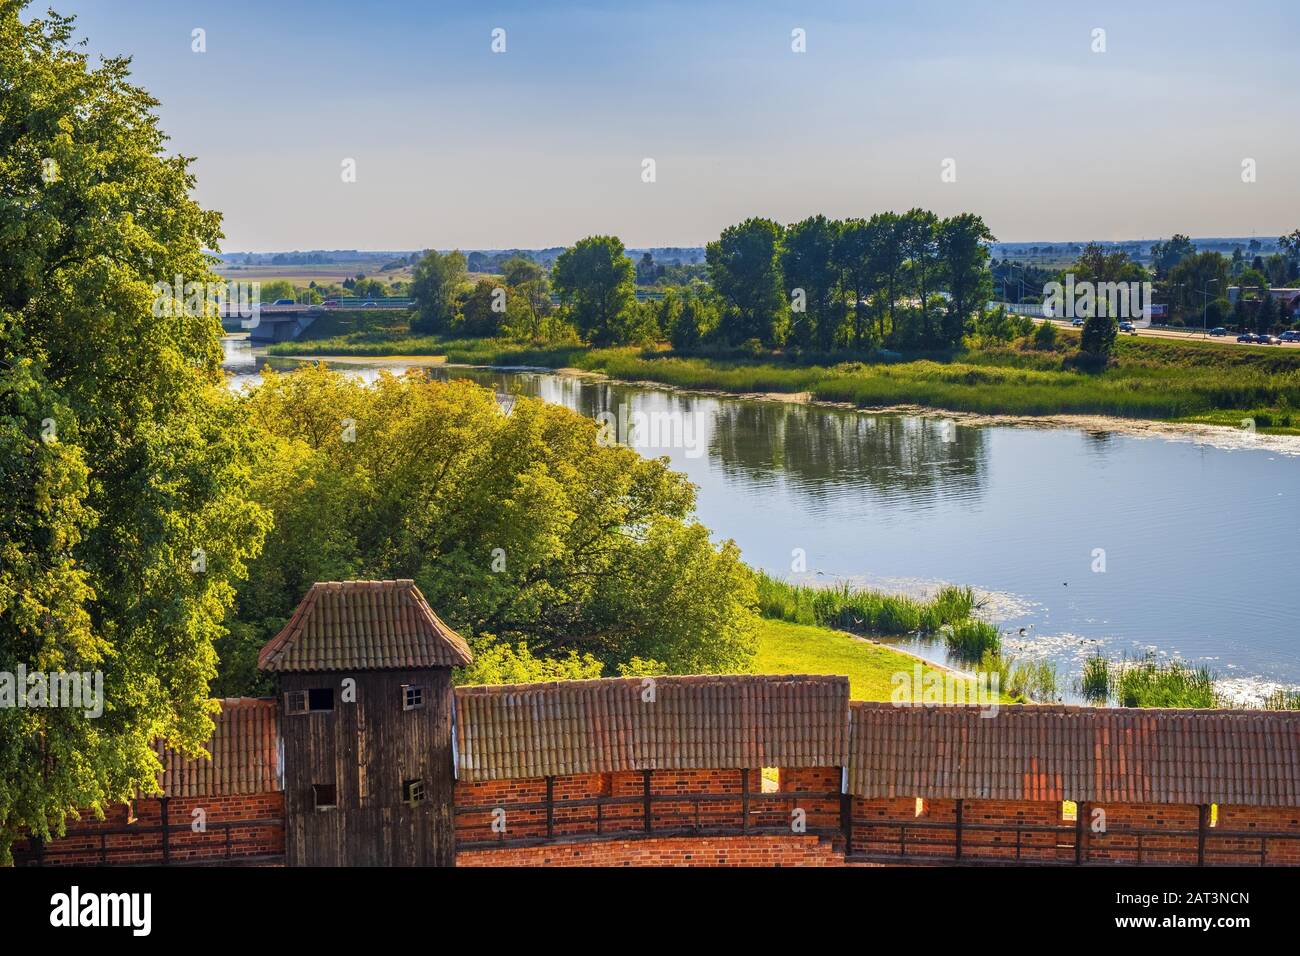 Malbork, Pomerania / Poland - 2019/08/24: Aerial panoramic view of the external defense walls Nogat river surrounding the medieval Teutonic Order Castle in Malbork, Poland Stock Photo